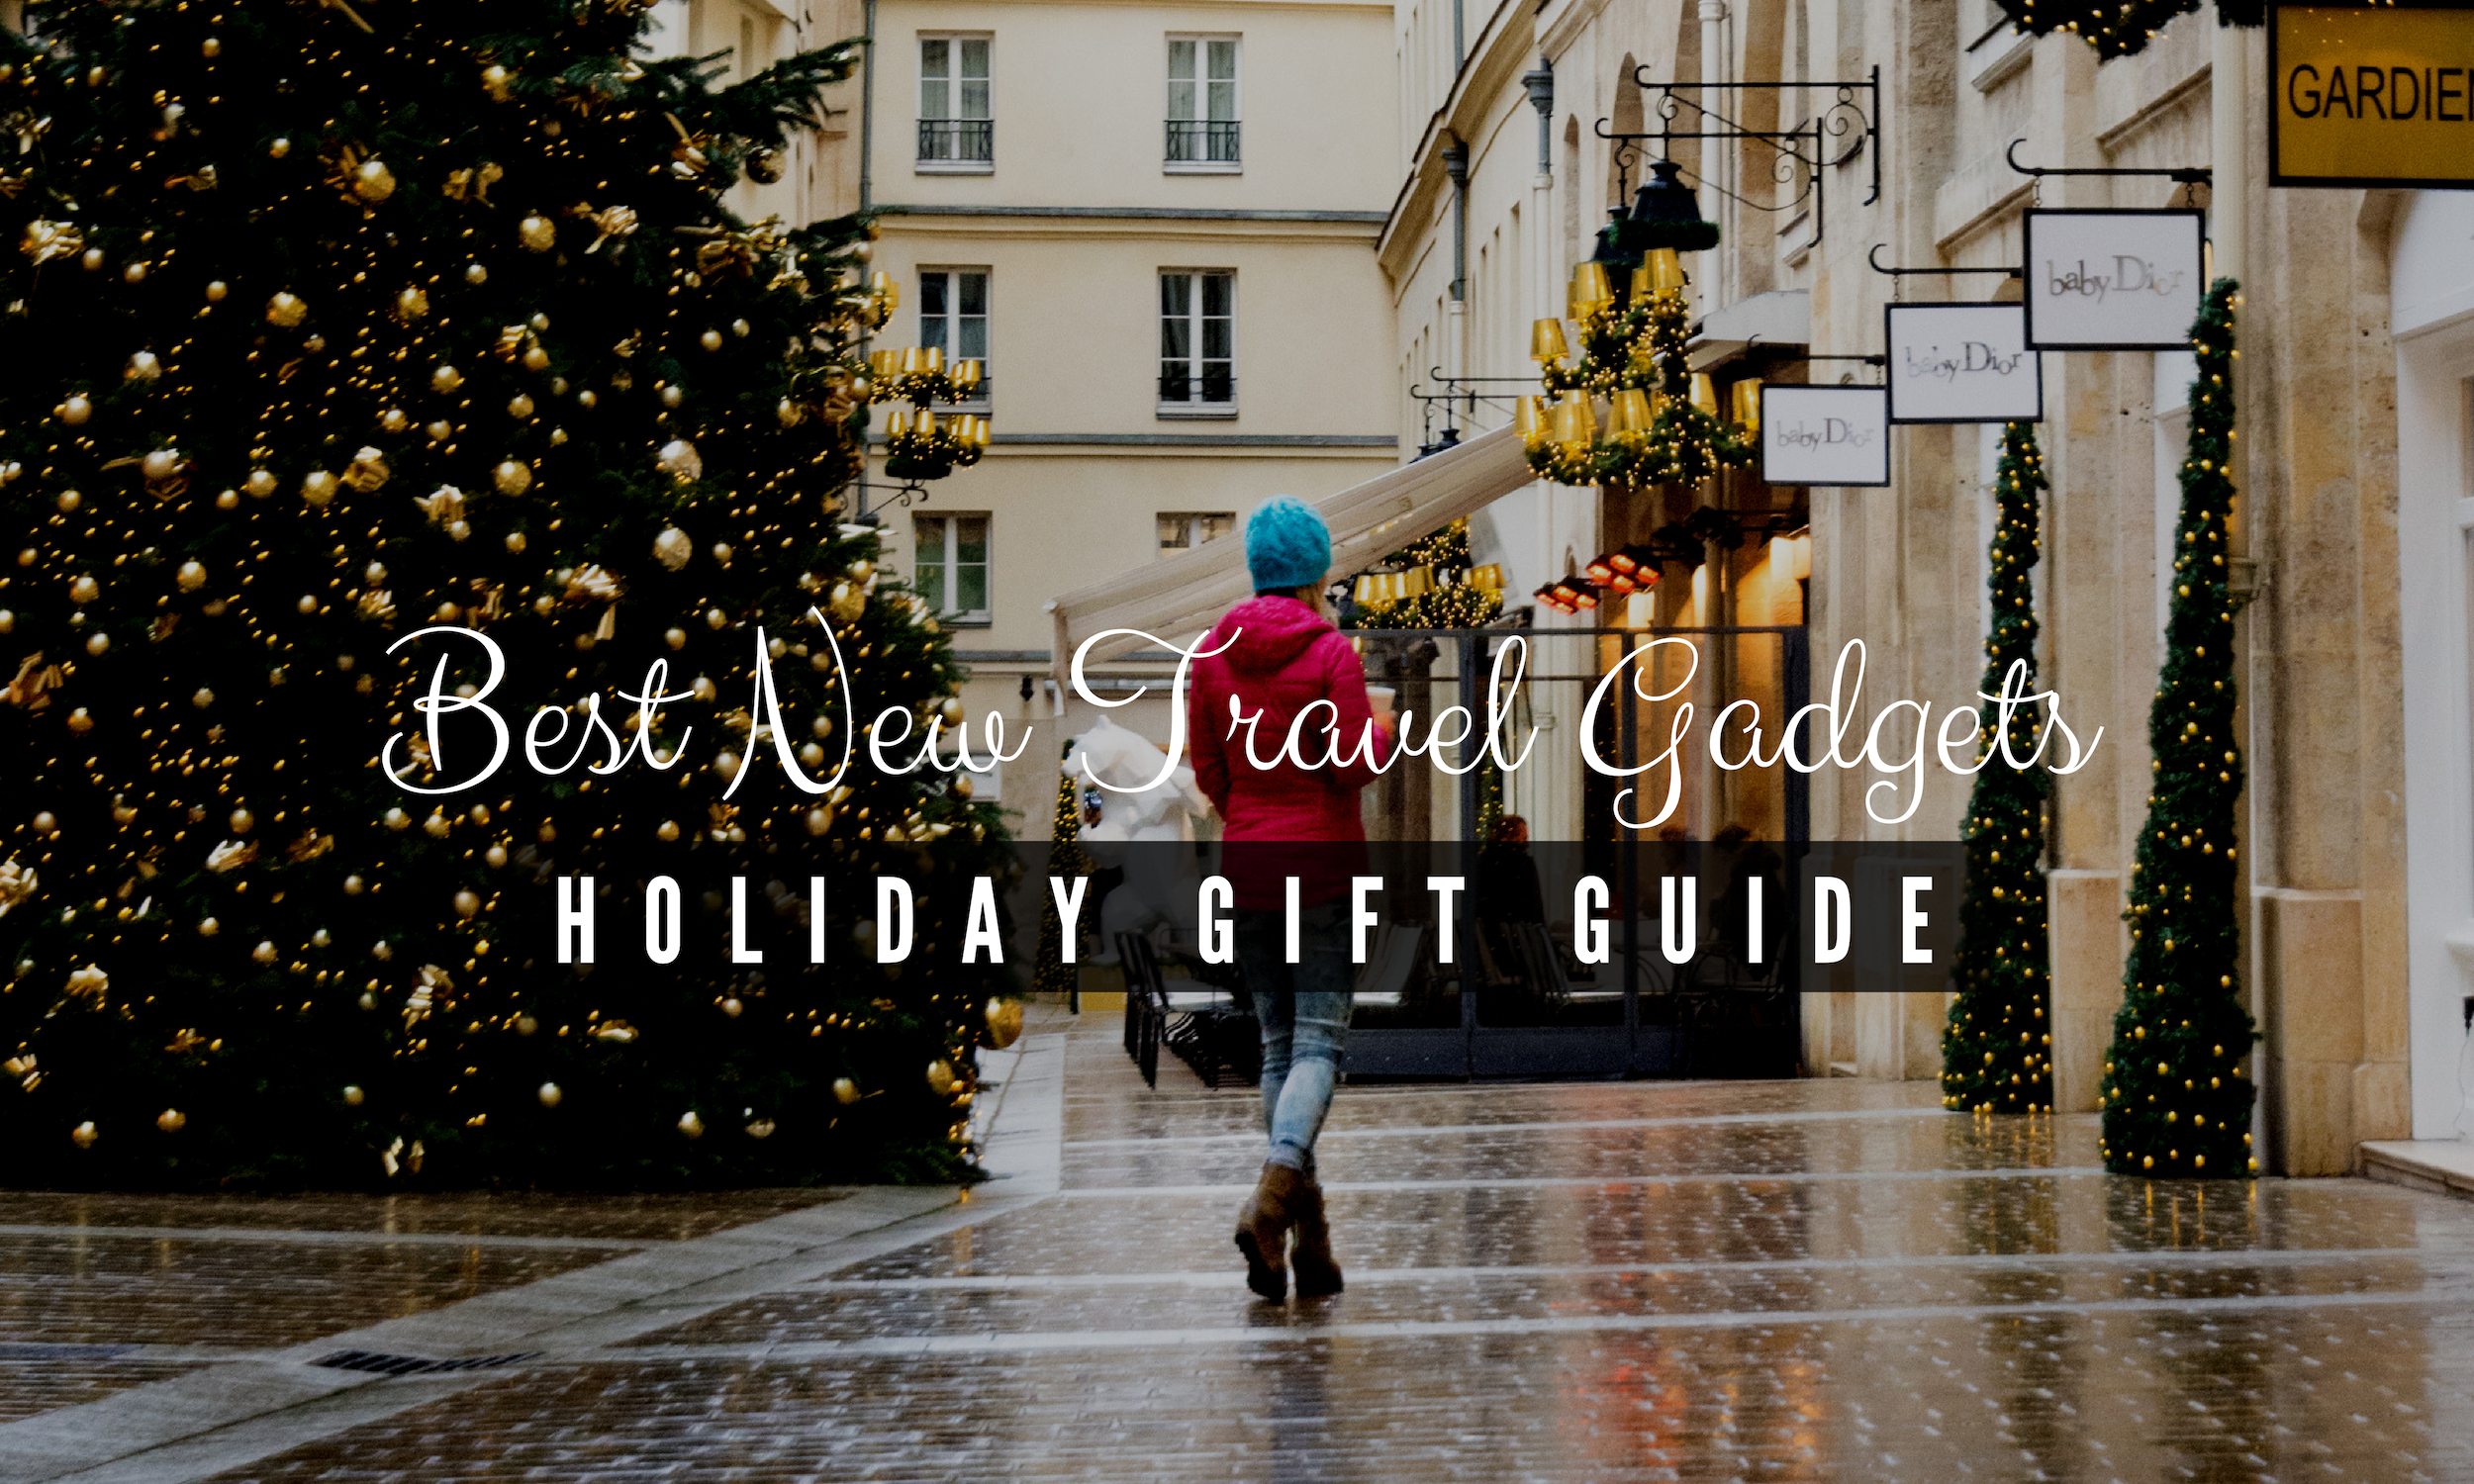 https://wanderingwheatleys.com/wp-content/uploads/2018/11/holiday-gift-guide-best-new-travel-gadgets-header-4.jpg